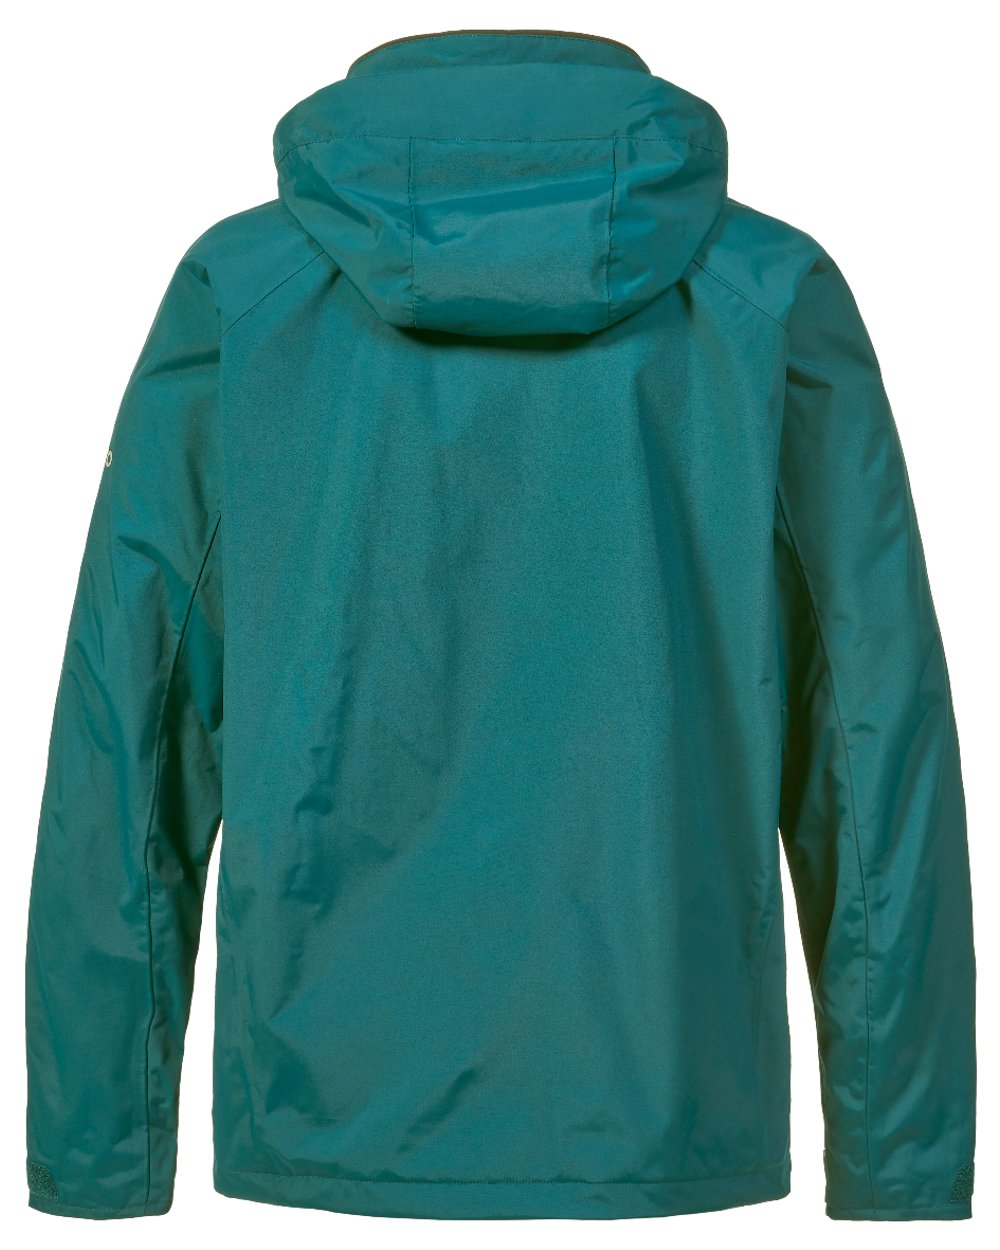 Musto Corsica Waterproof Jacket 2.0 in Deep Teal 